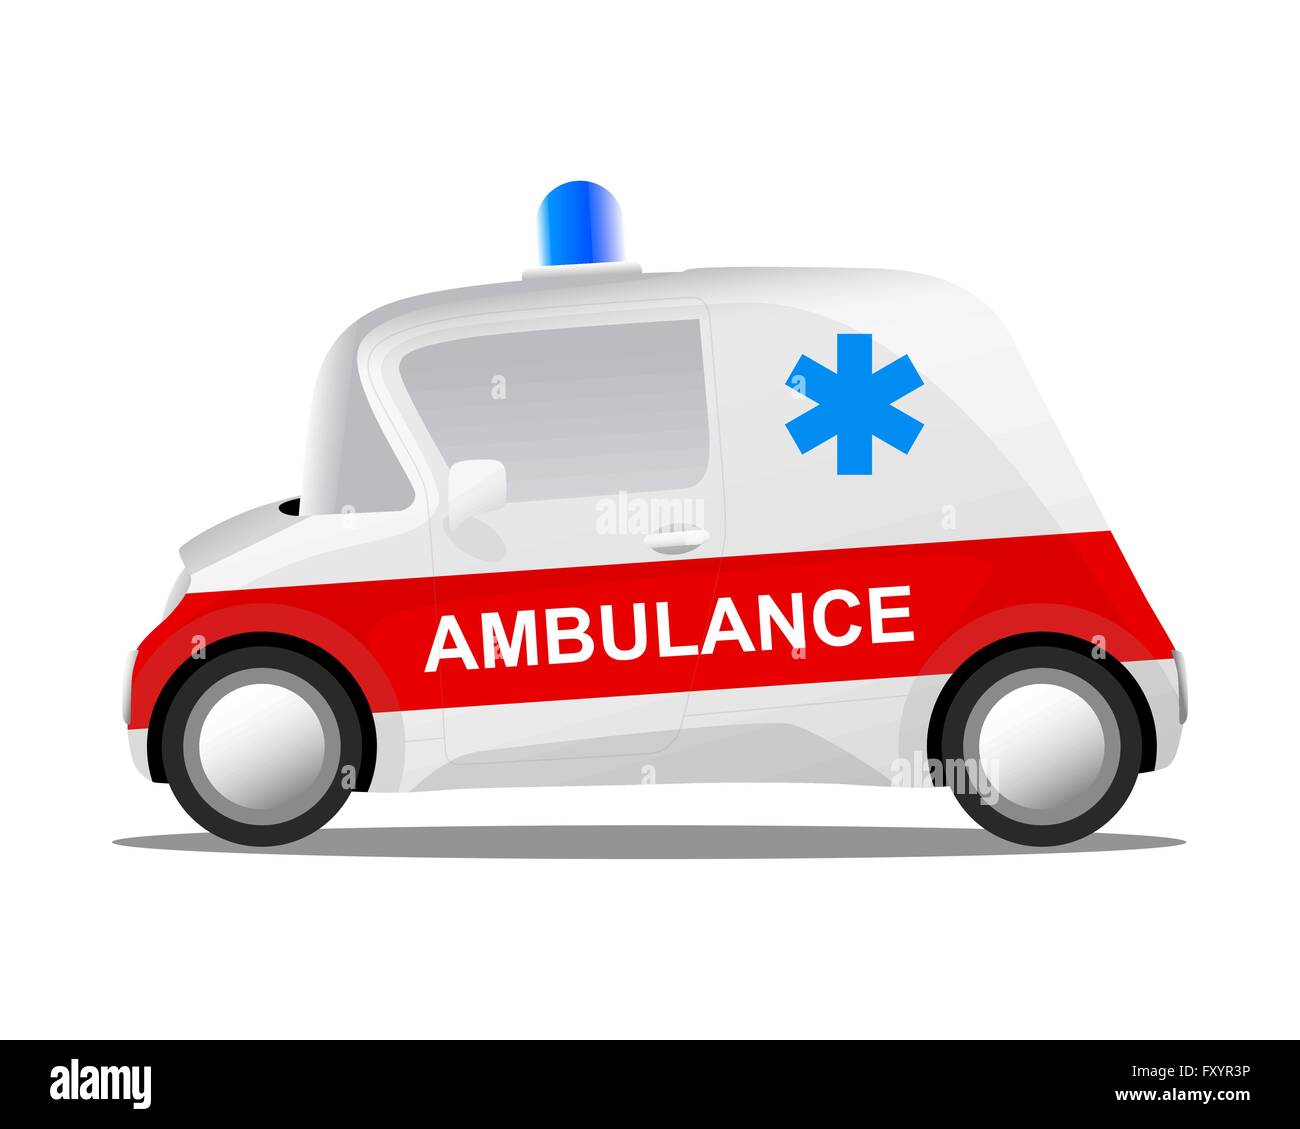 mini car cartoon ambulance, vector illustration Stock Vector